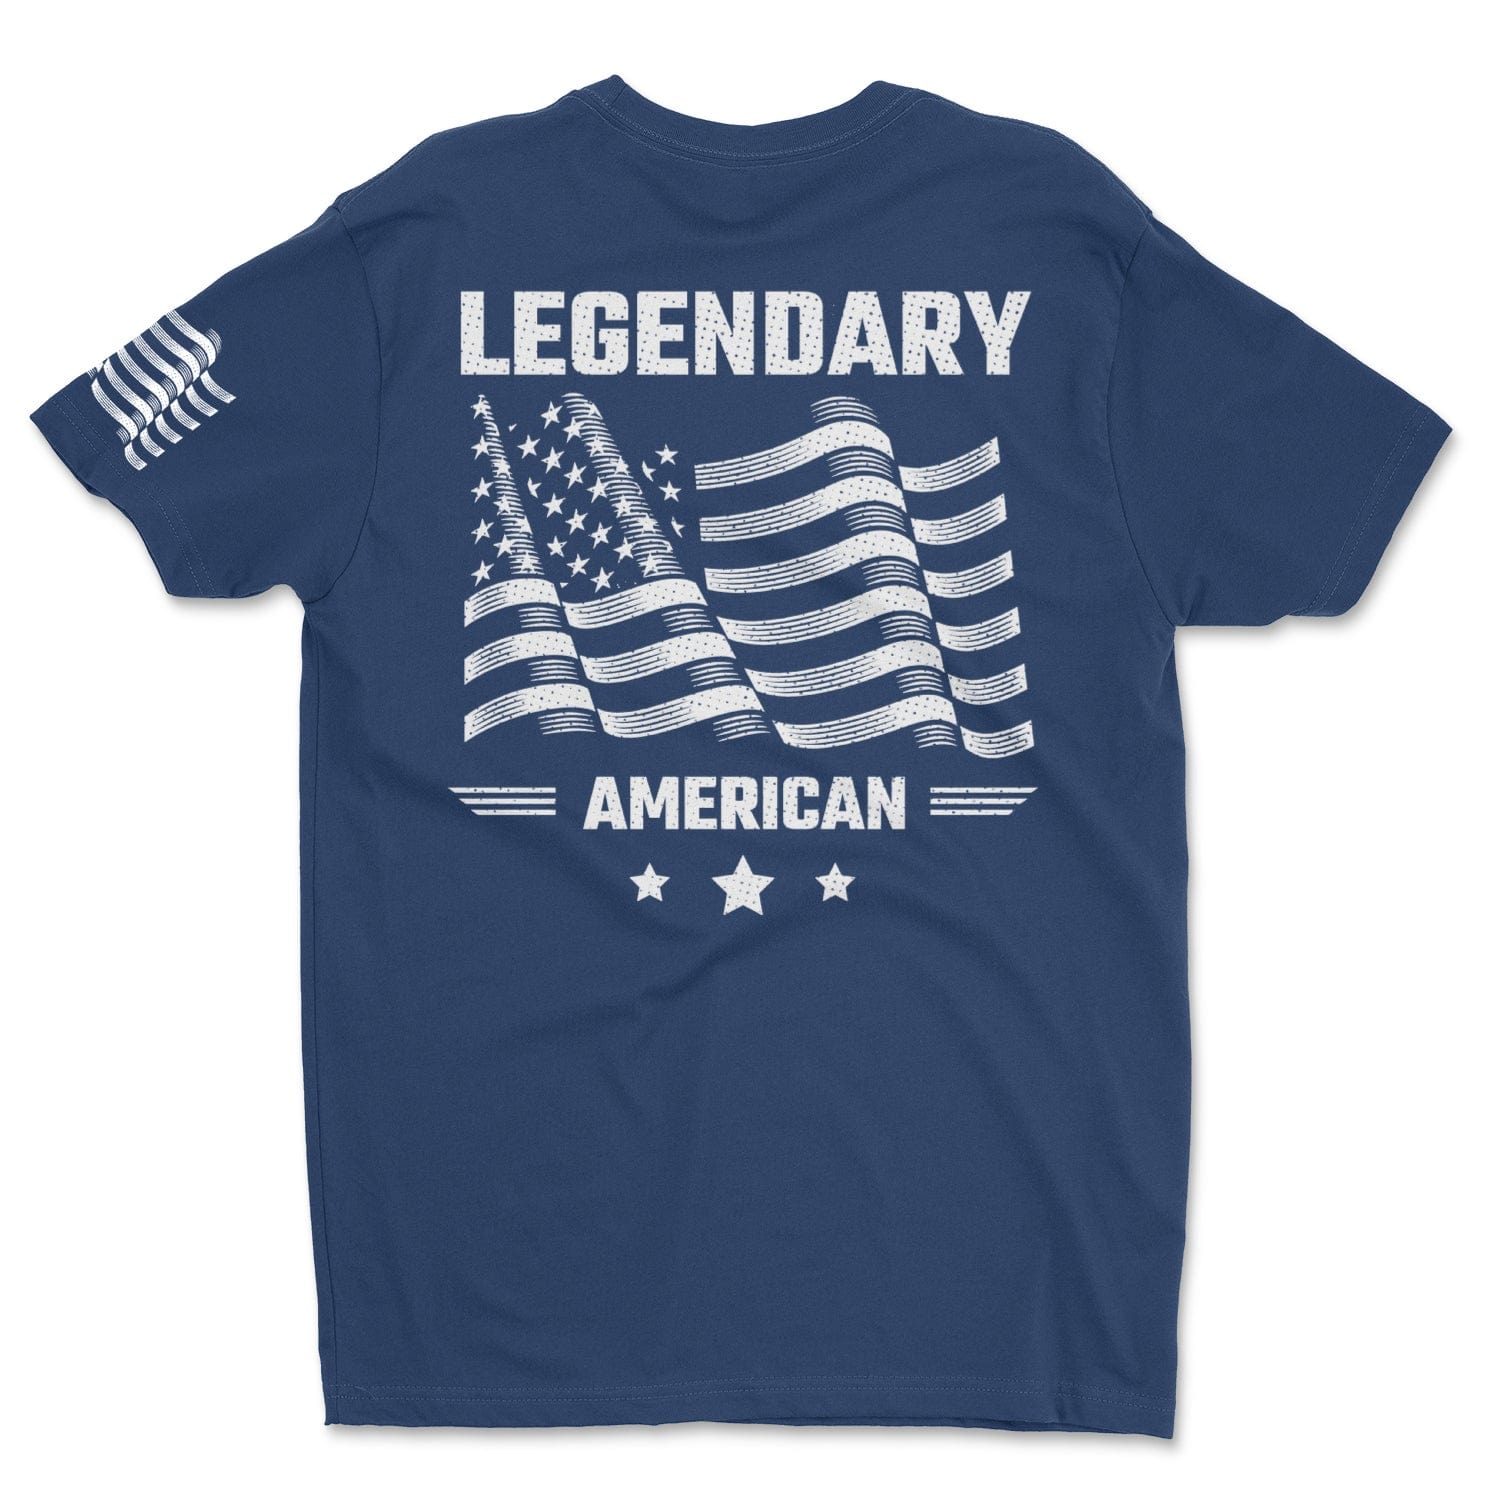 Legendary ltd. T SHIRT Legendary American